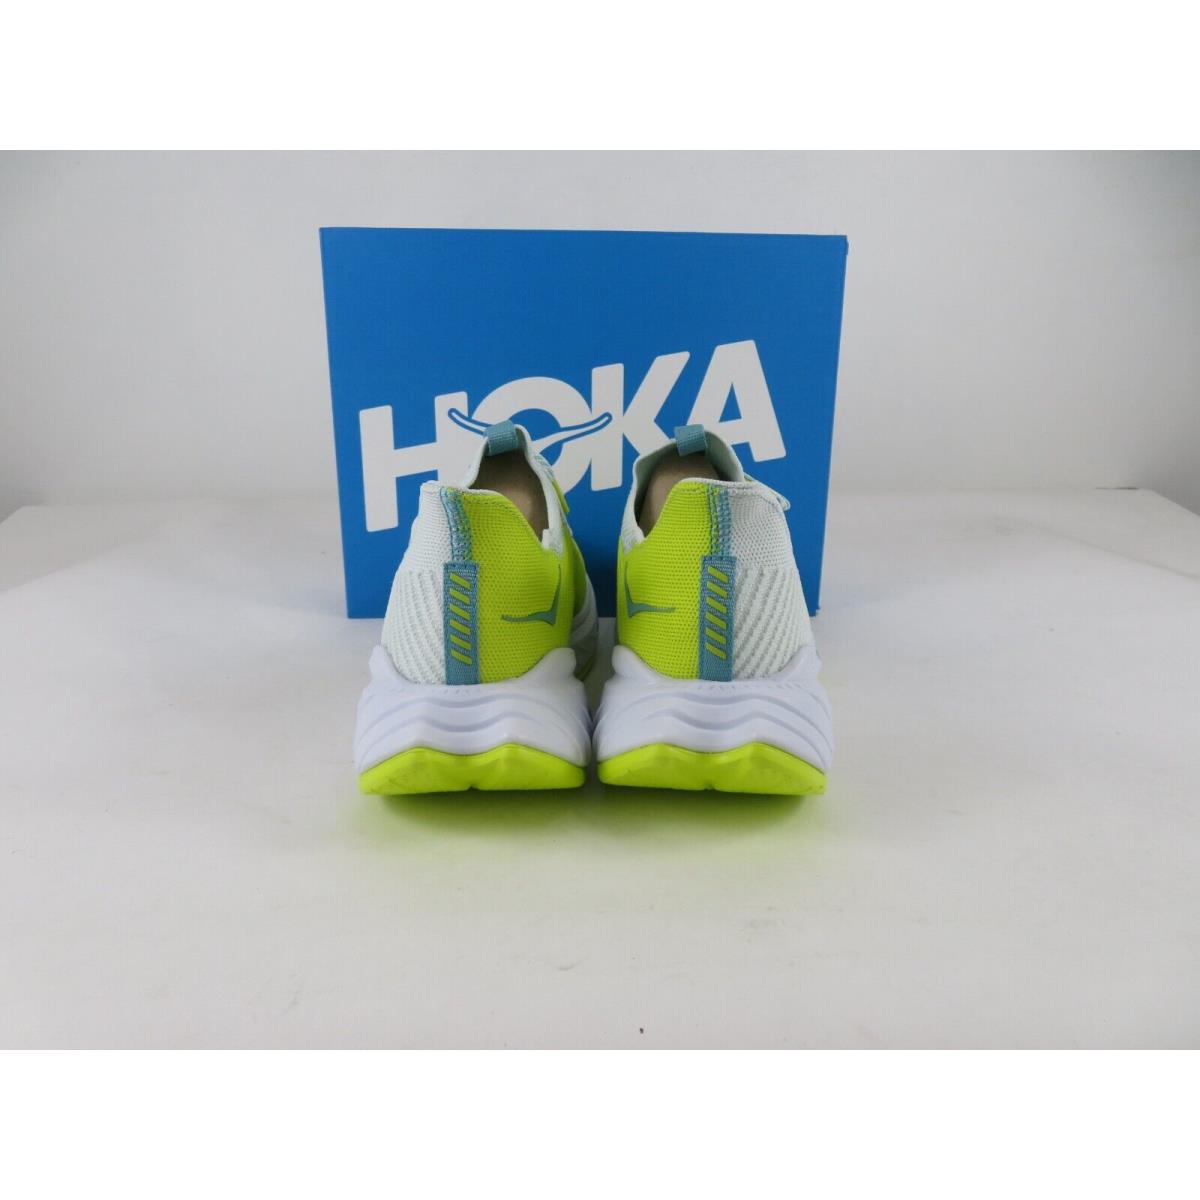 Hoka shoes  - Yellow 0